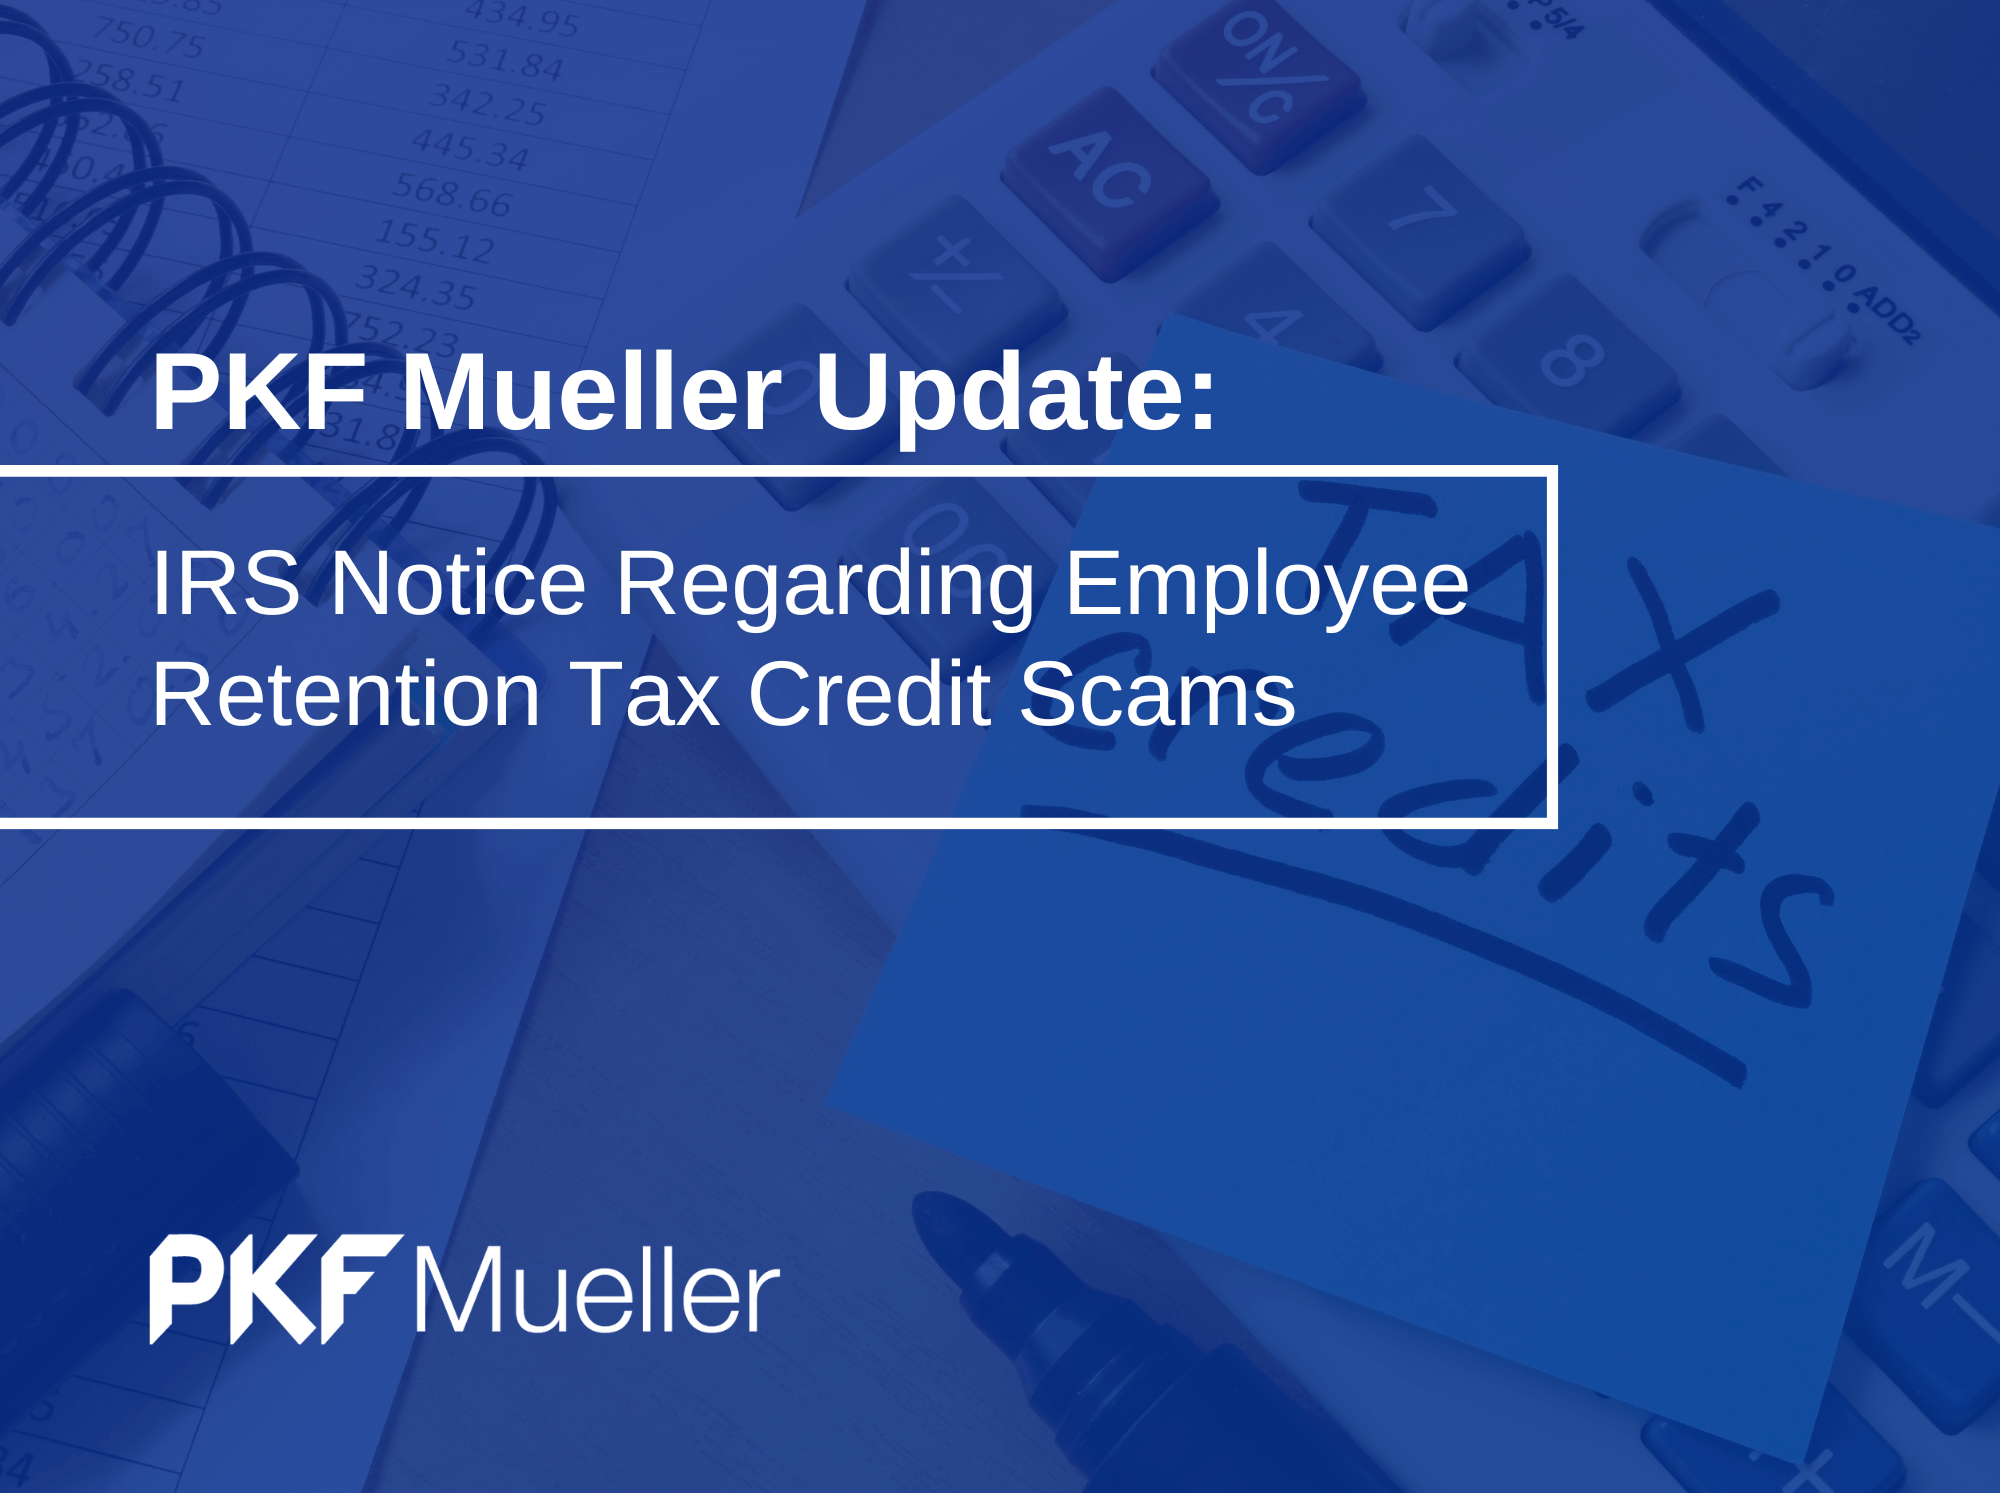 IRS Notice Regarding Employee Retention Tax Credit Scams